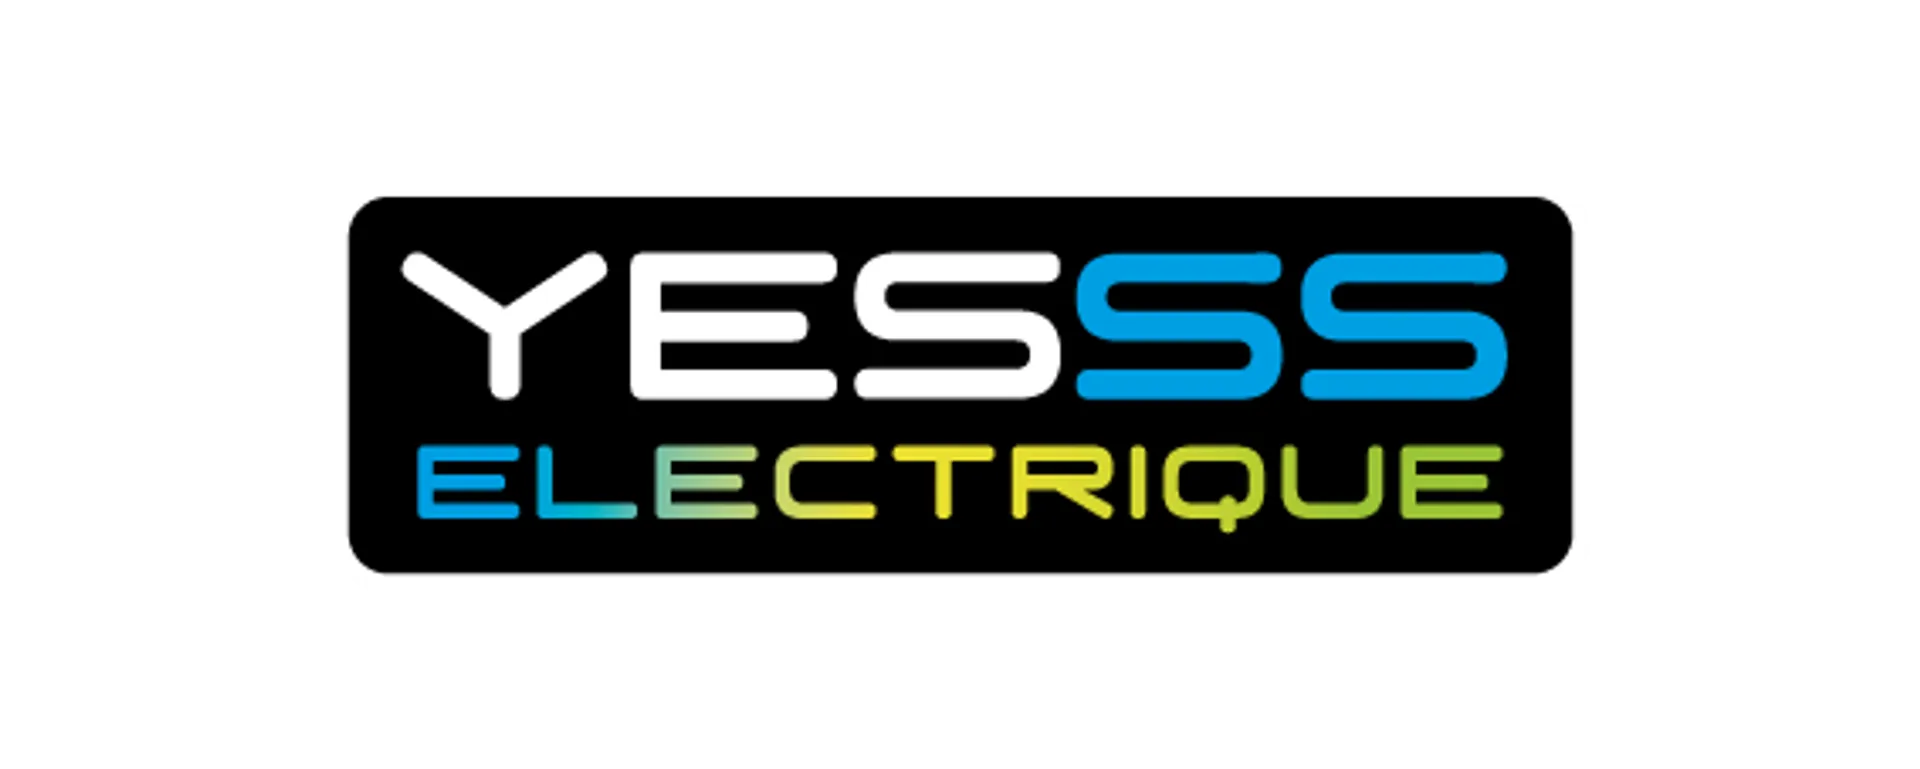 YESSS ELECTRIQUE logo